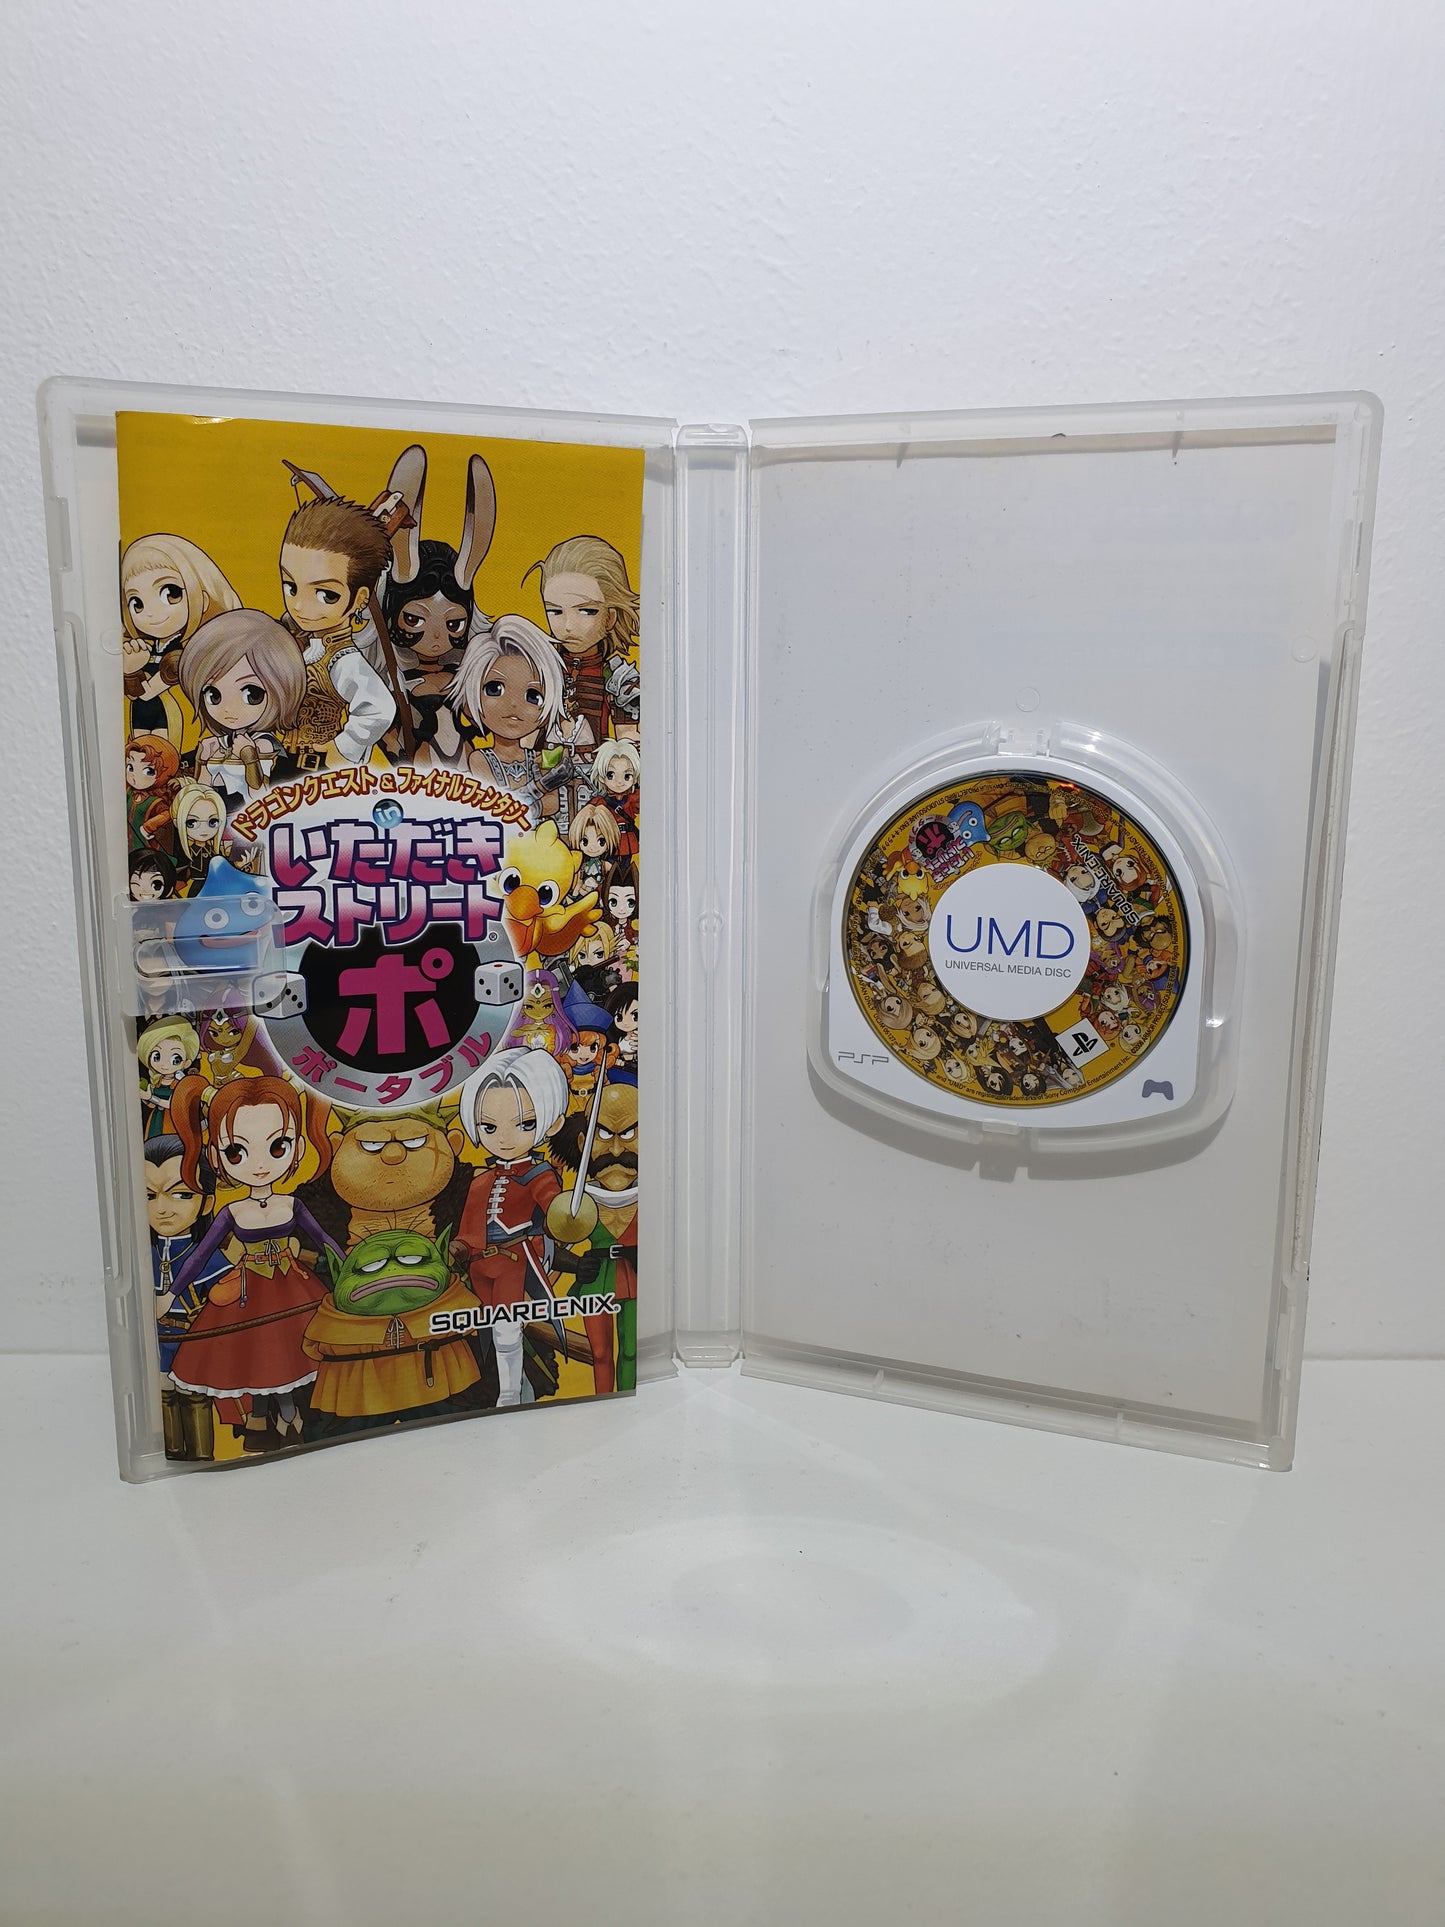 Dragon Quest & Final Fantasy In Itadaki Street (Import Japon) PSP - Occasion très bon état